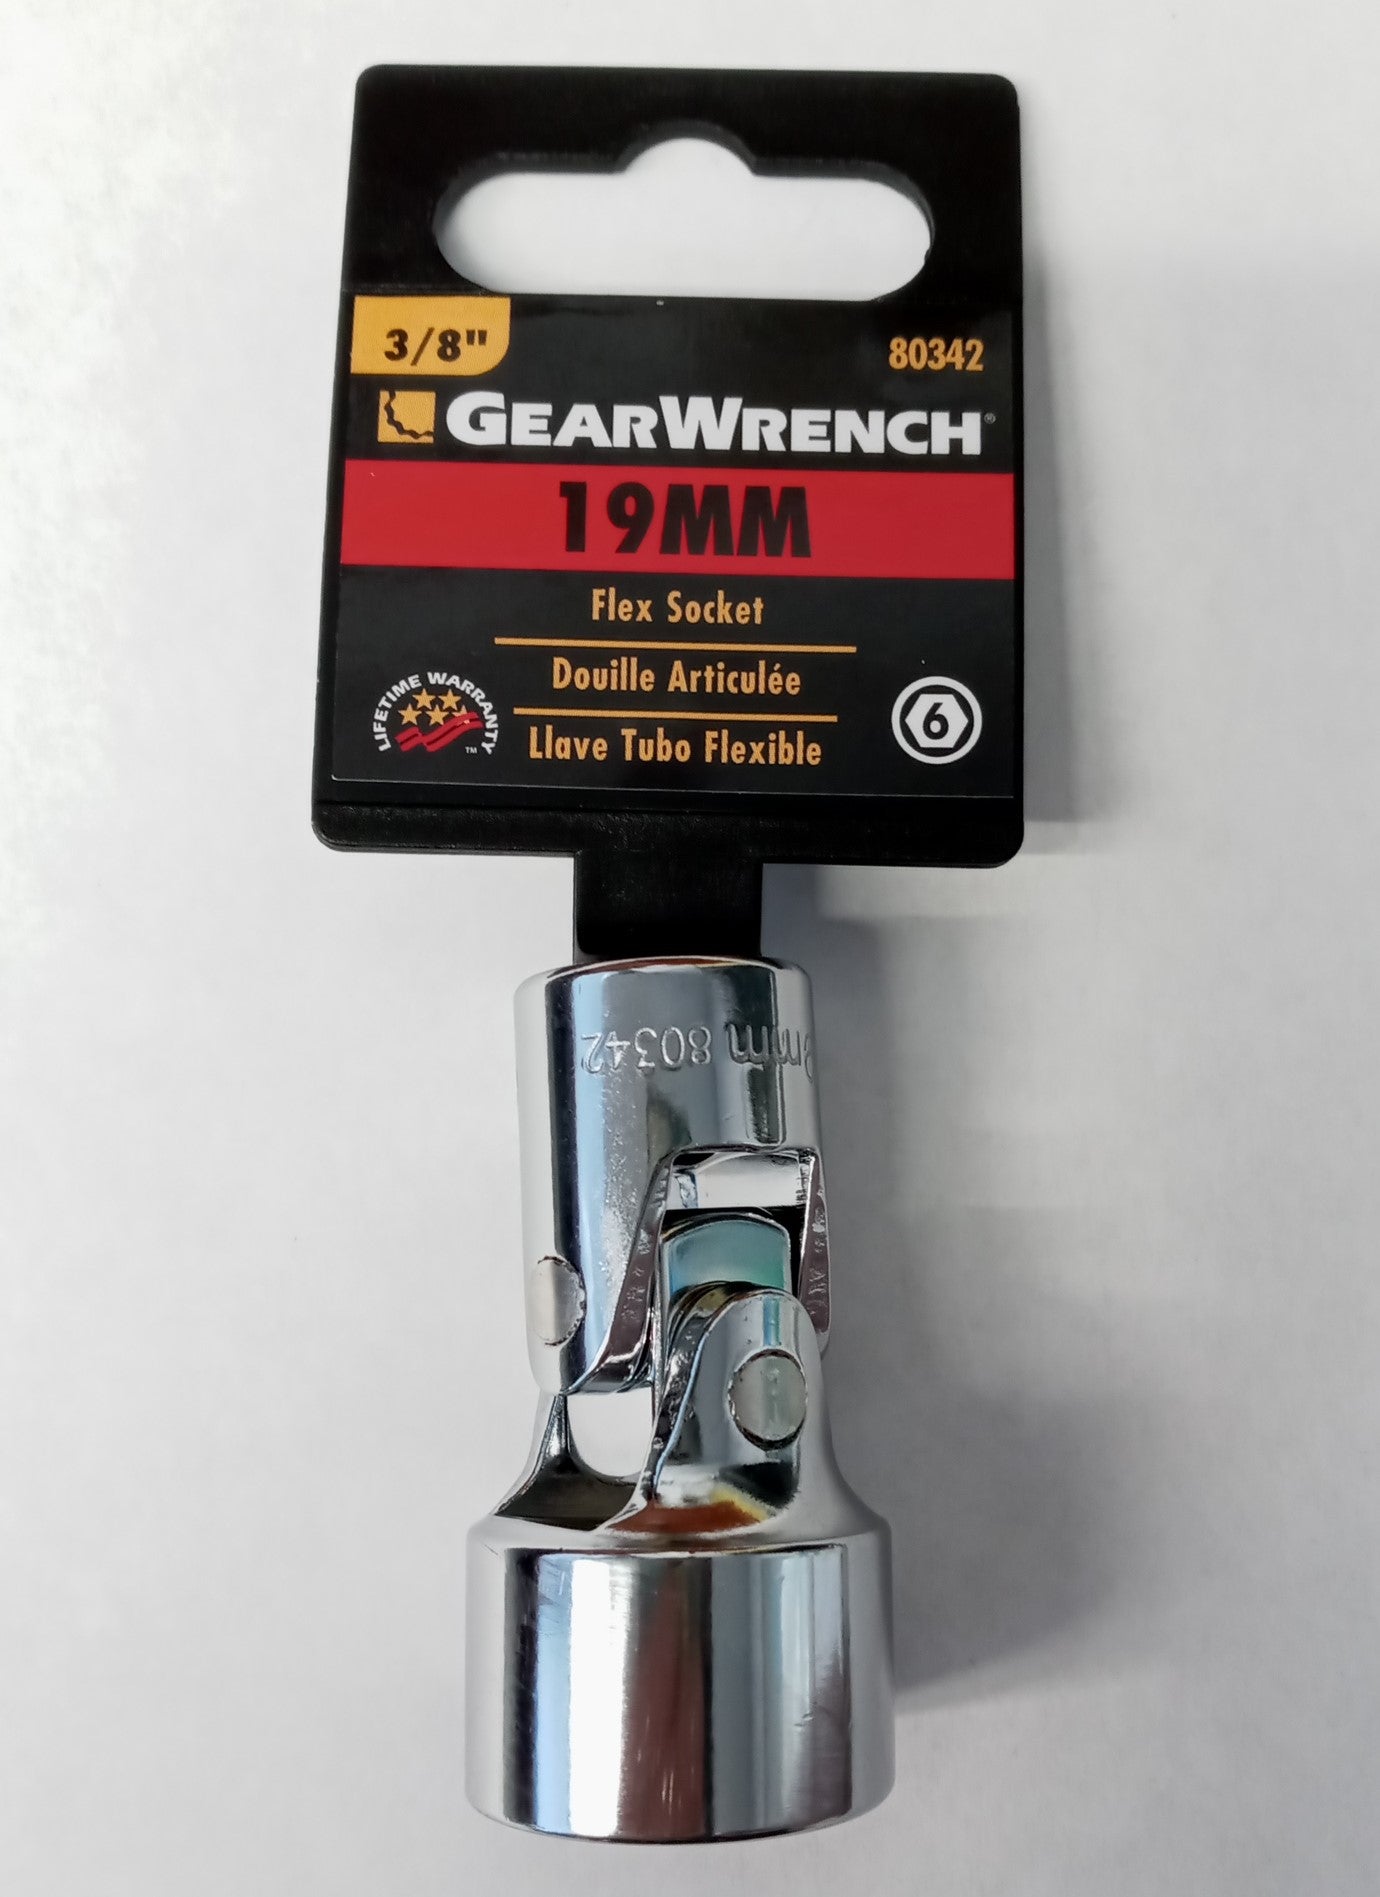 GEARWRENCH 80342 3/8" Drive Metric Flex Socket 19mm, 6 Point